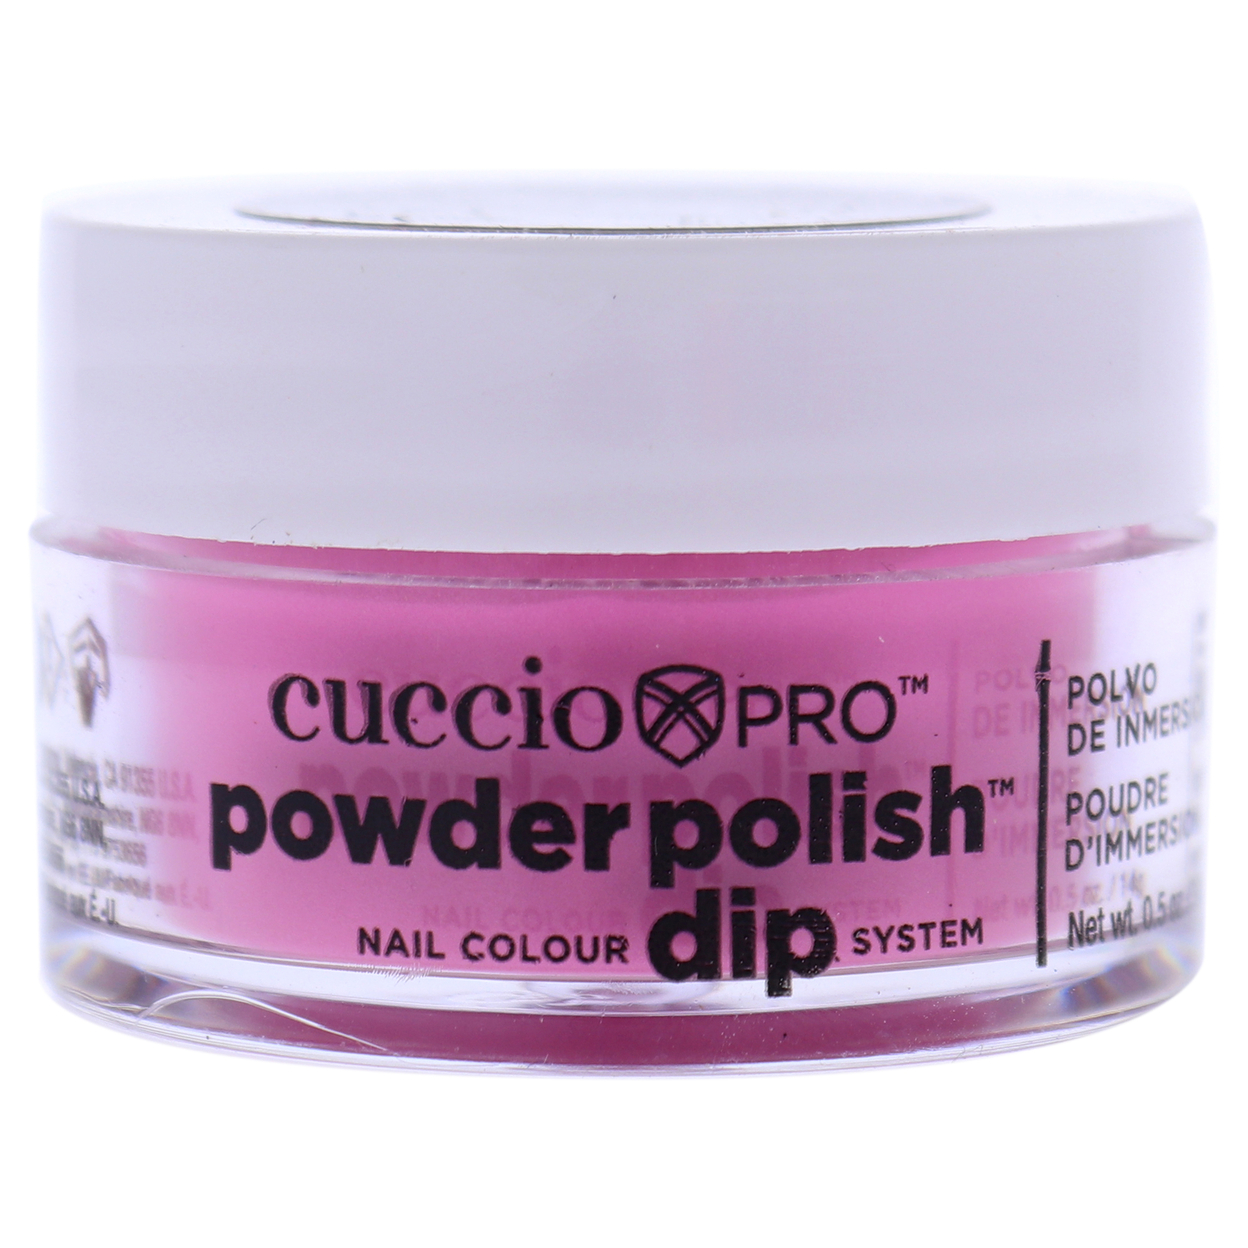 Cuccio Colour Pro Powder Polish Nail Colour Dip System - Bright Pink Nail Powder 0.5 Oz